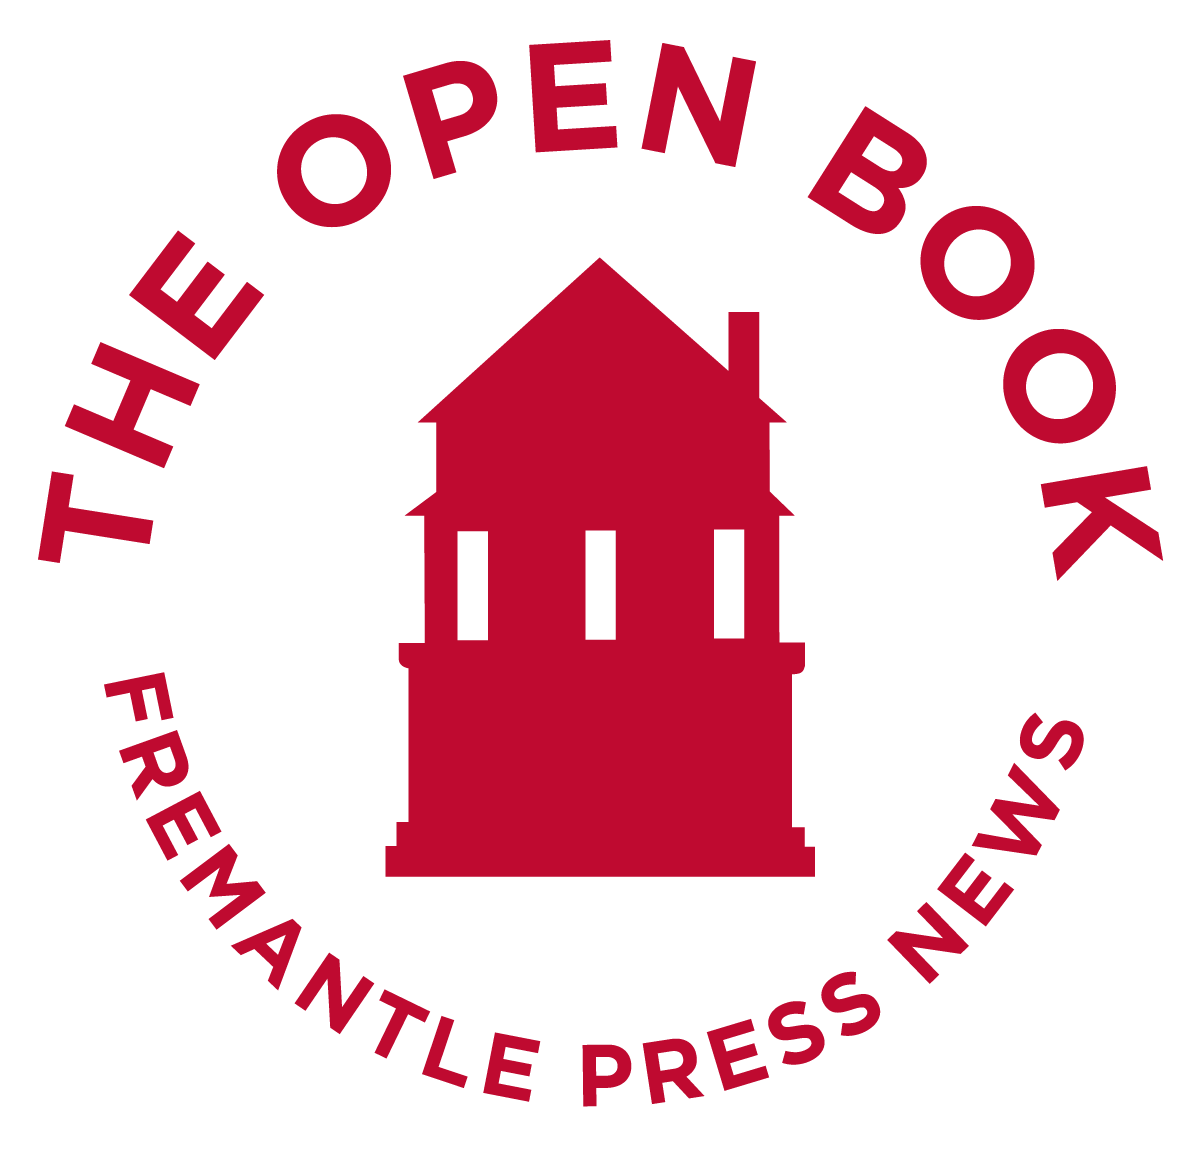 'The Open Book' (Fremantle Press general newsletter)